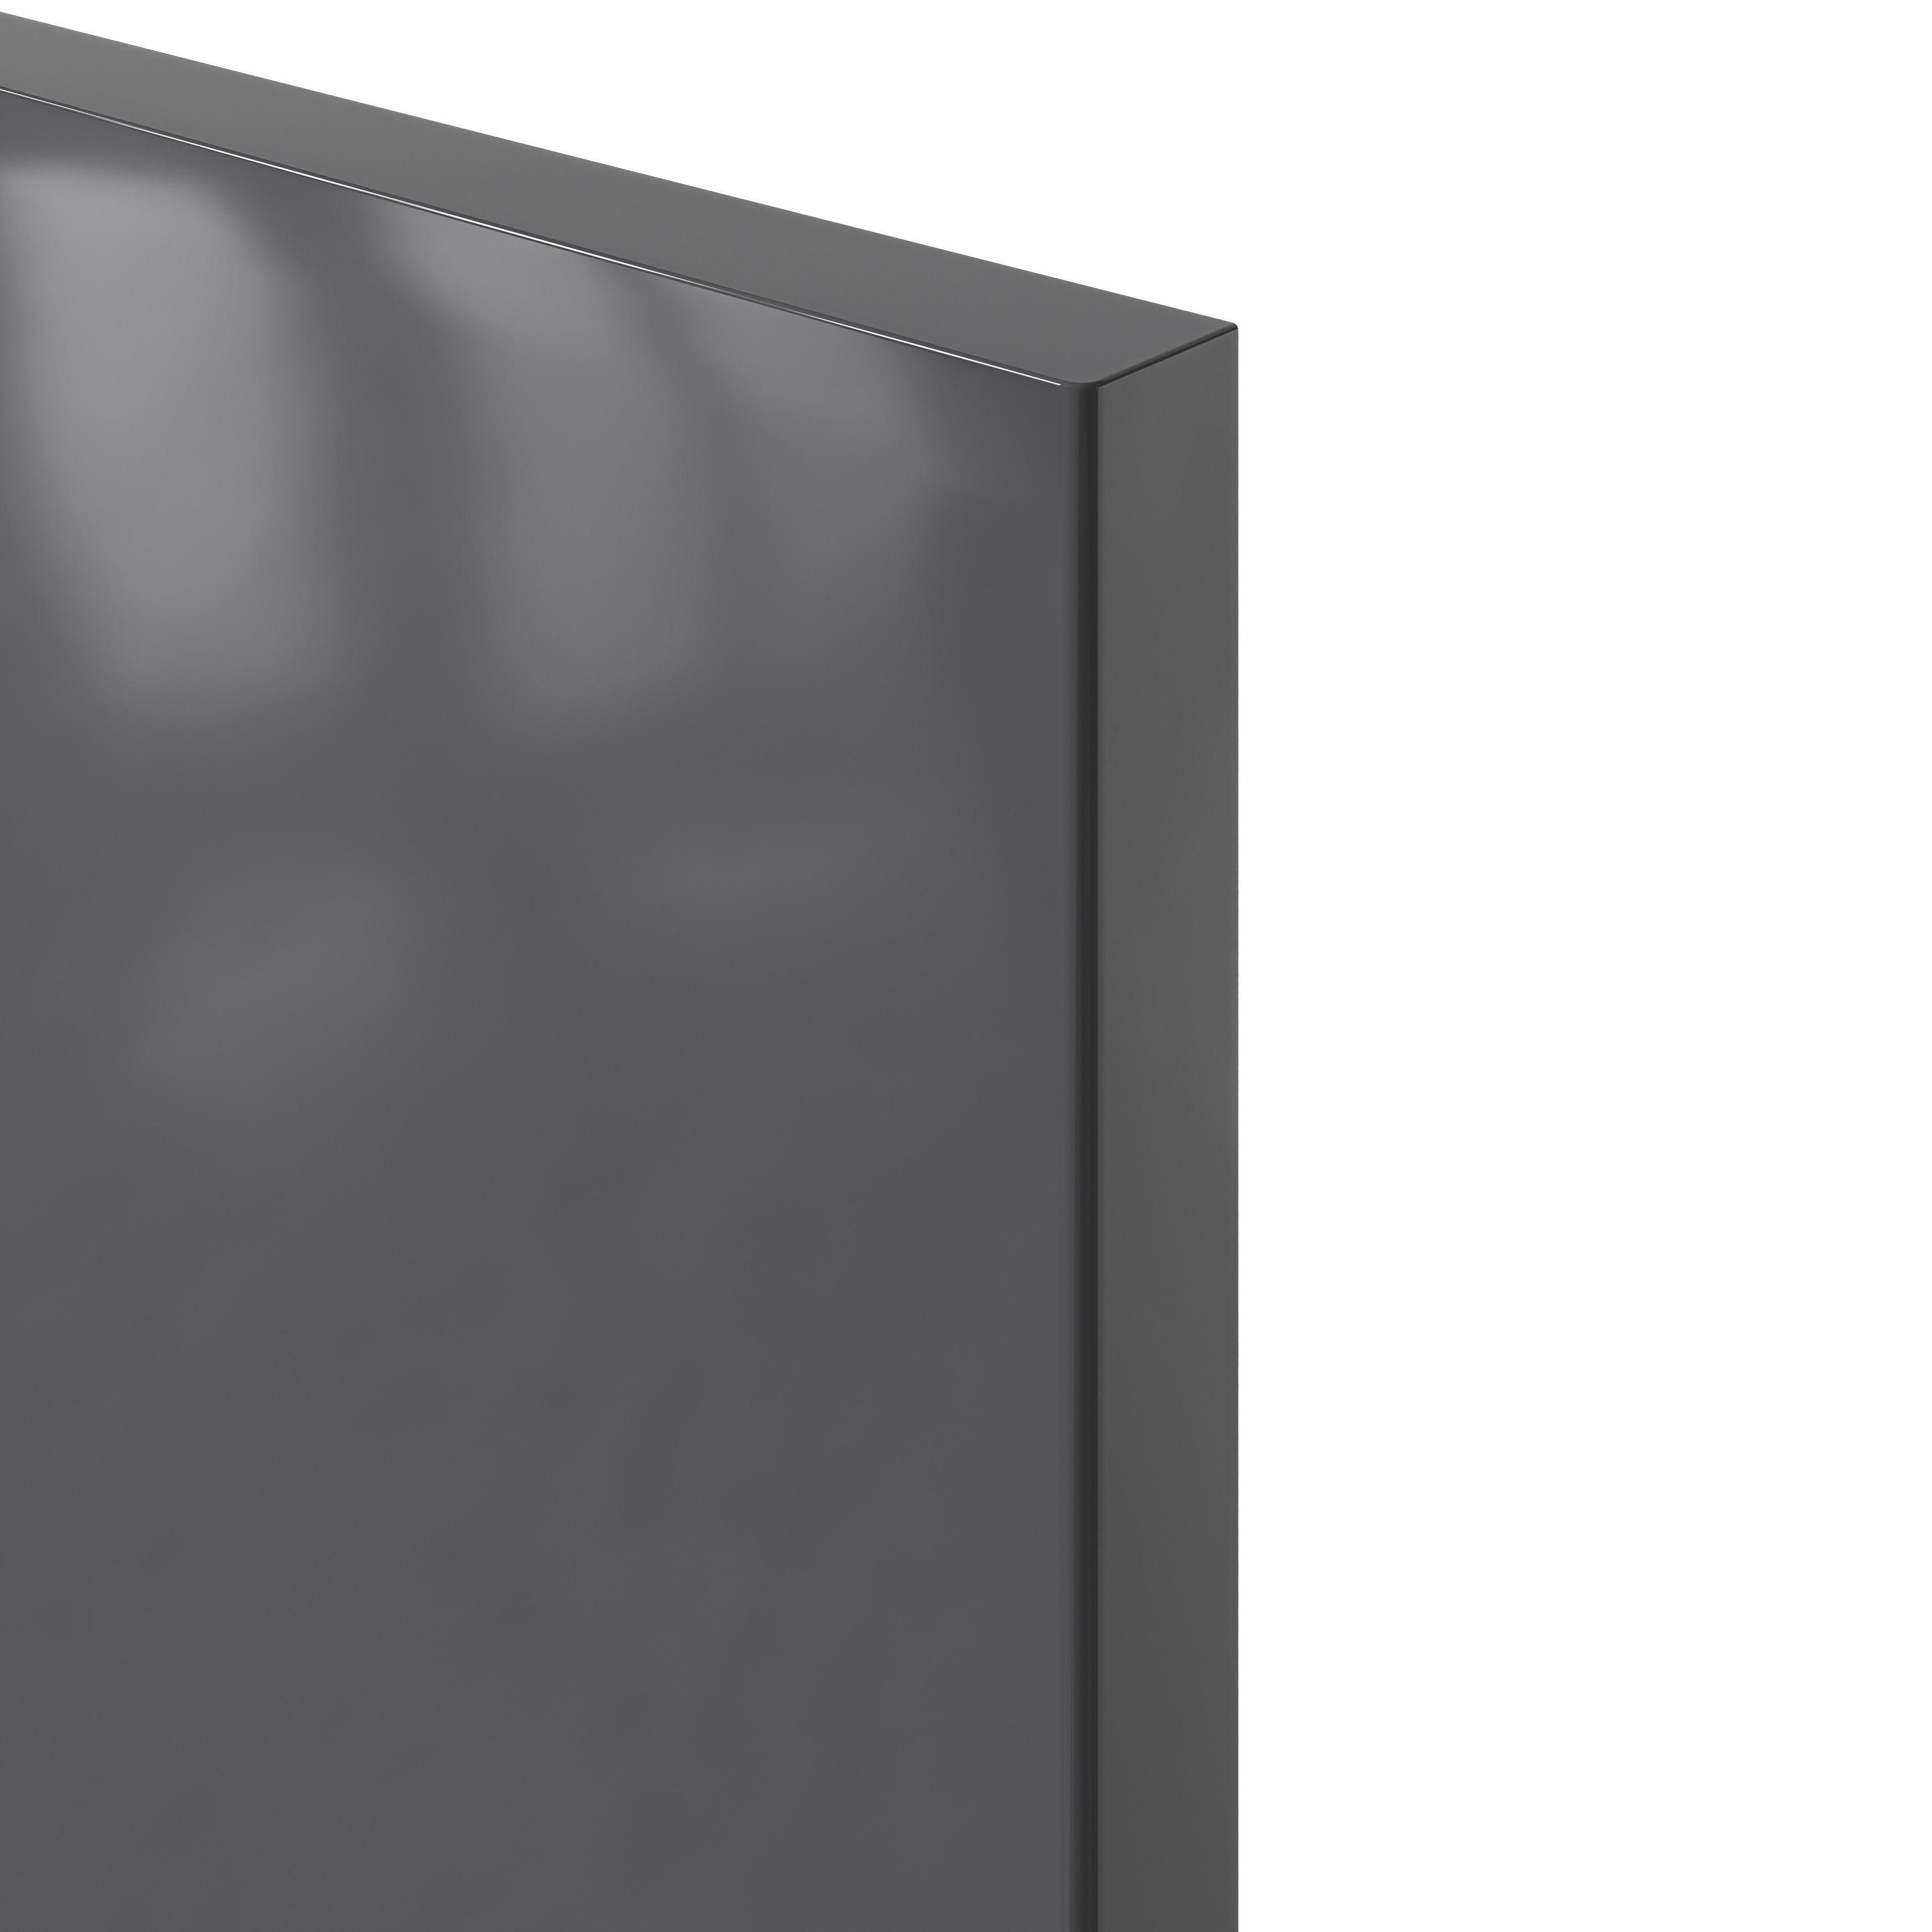 GoodHome Stevia Innovo handleless gloss anthracite slab Drawer front, bridging door & bi fold door, (W)500mm (H)340mm (T)18mm